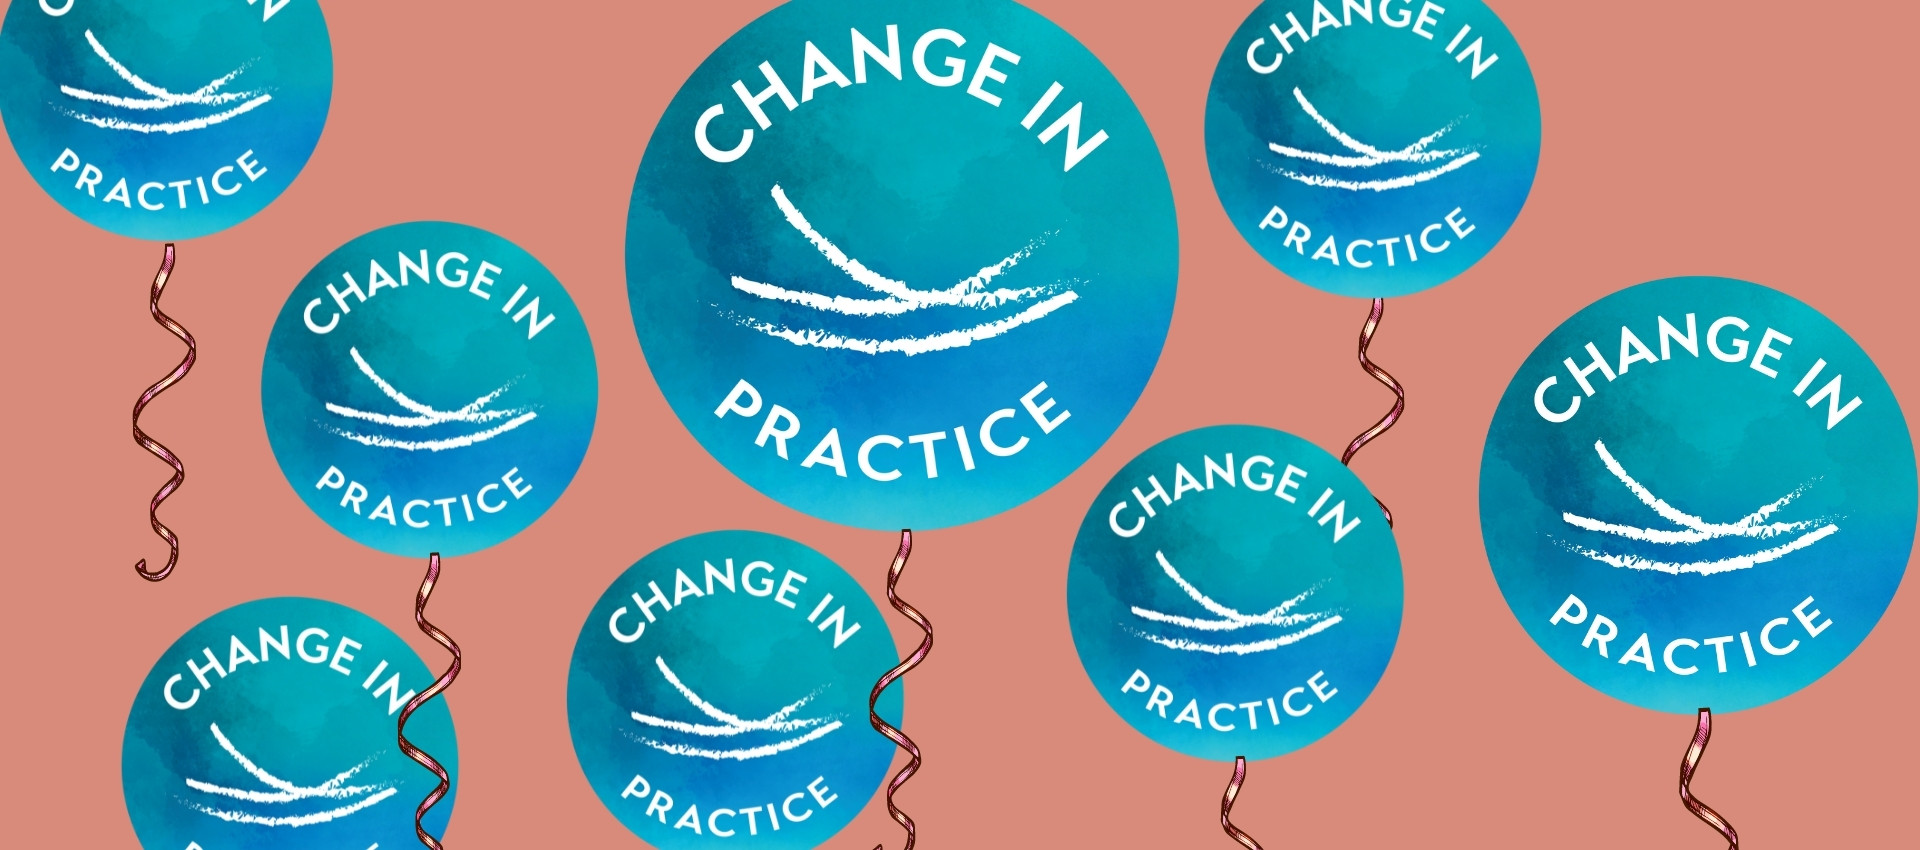 Change in Practice birthday balloons